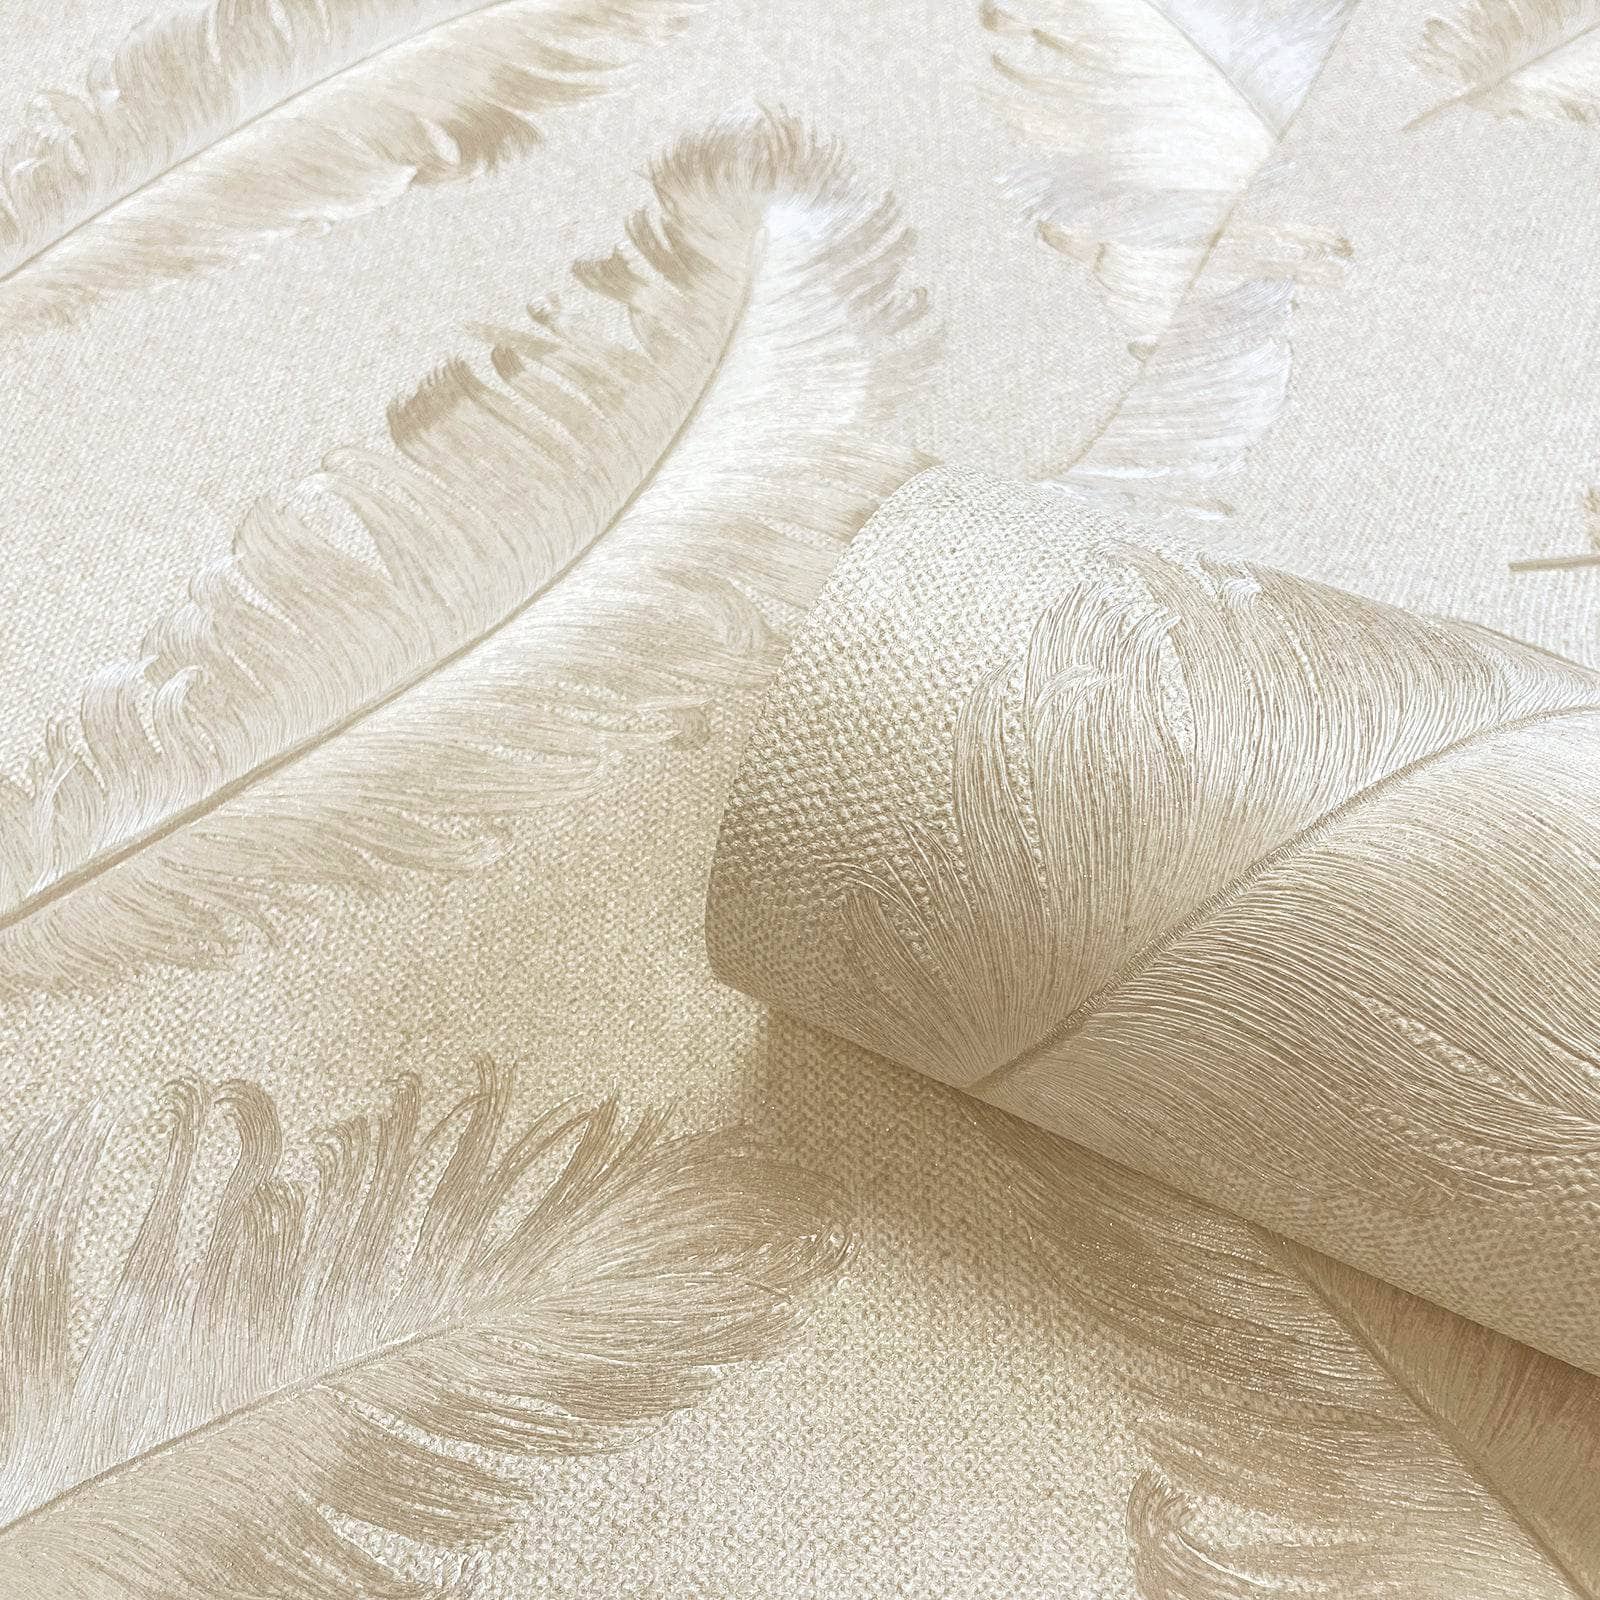 Wallpaper  -  Belgravia Ciara Soft Beige Feather Wallpaper - 60005881  -  60005881